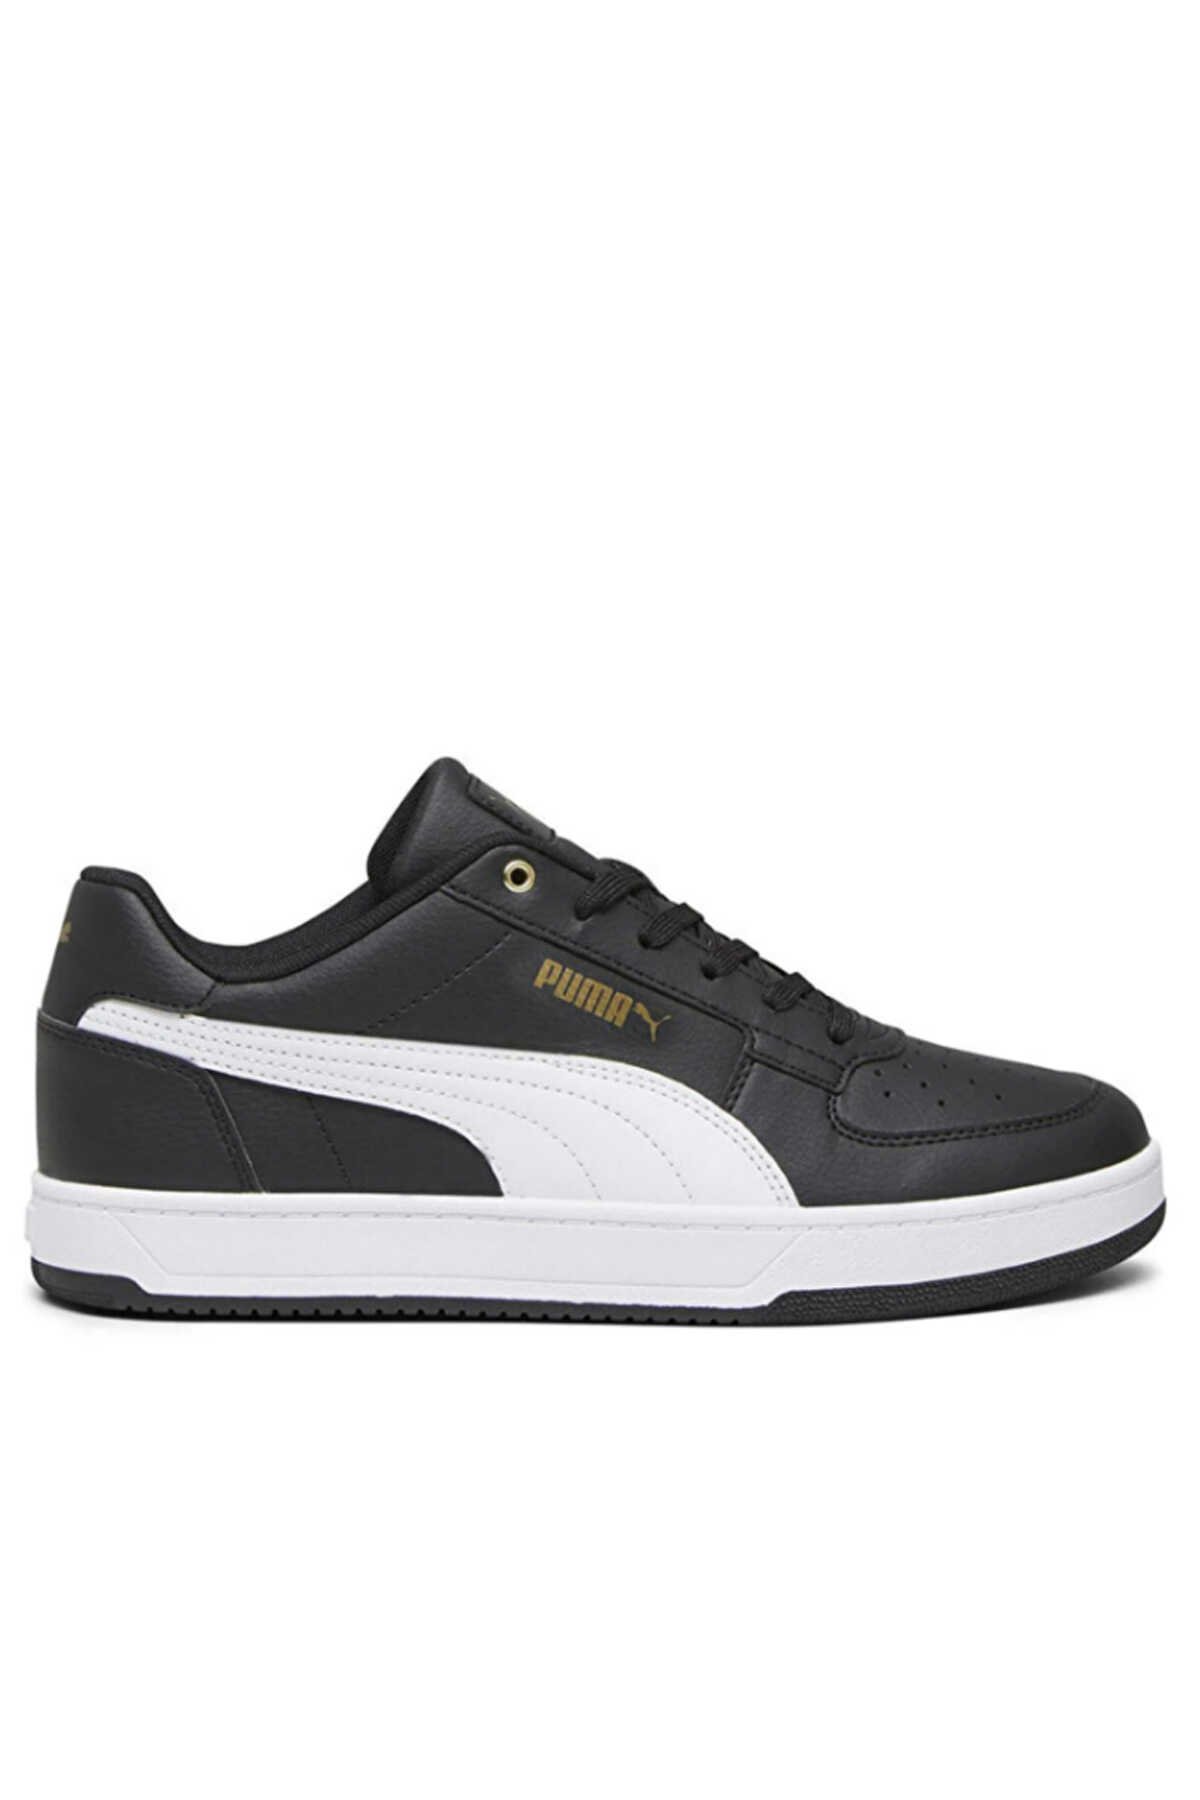 Puma - Puma Caven 2.0 Unisex Sneaker Ayakkabı Siyah / Beyaz